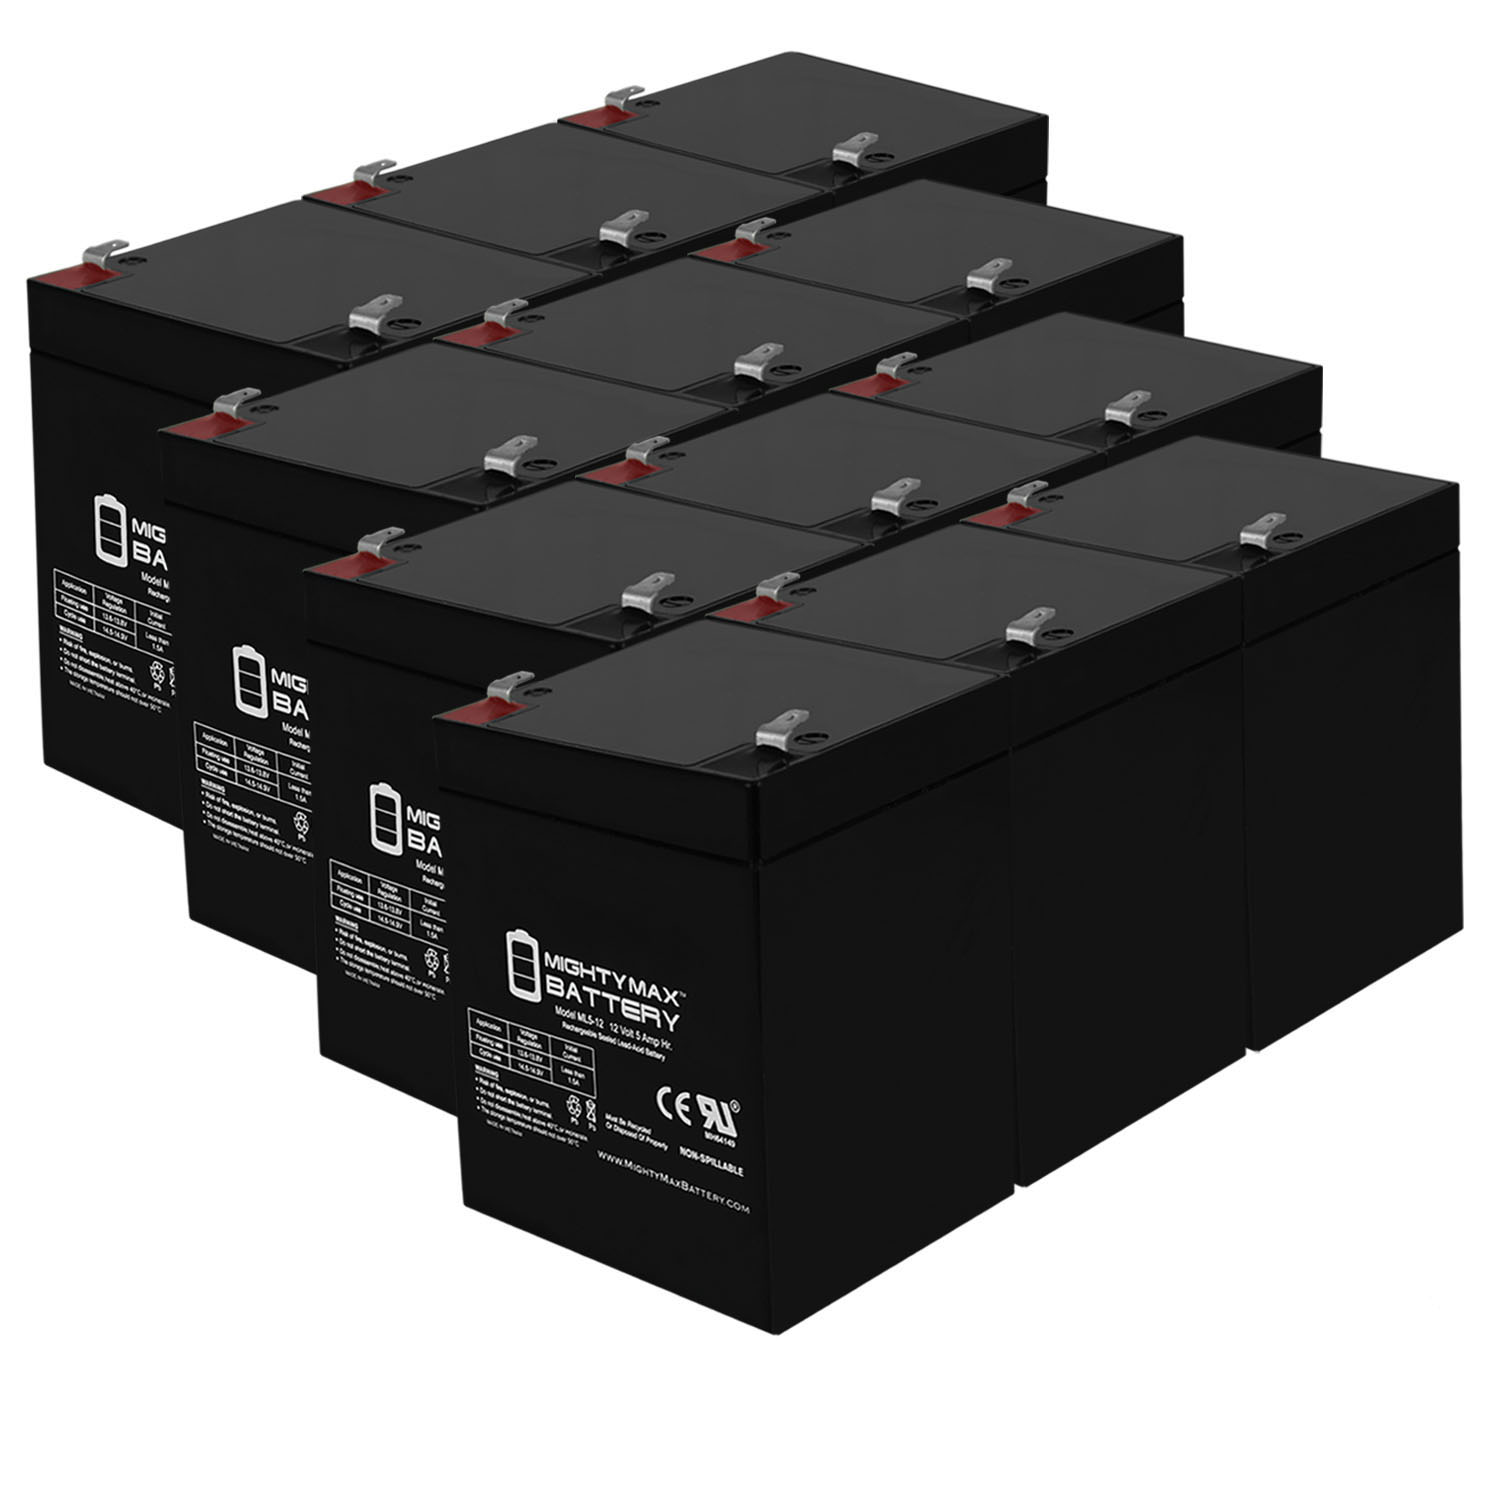 12V 5AH SLA Replacement Battery for Razor Razr MX350 - 12 Pack